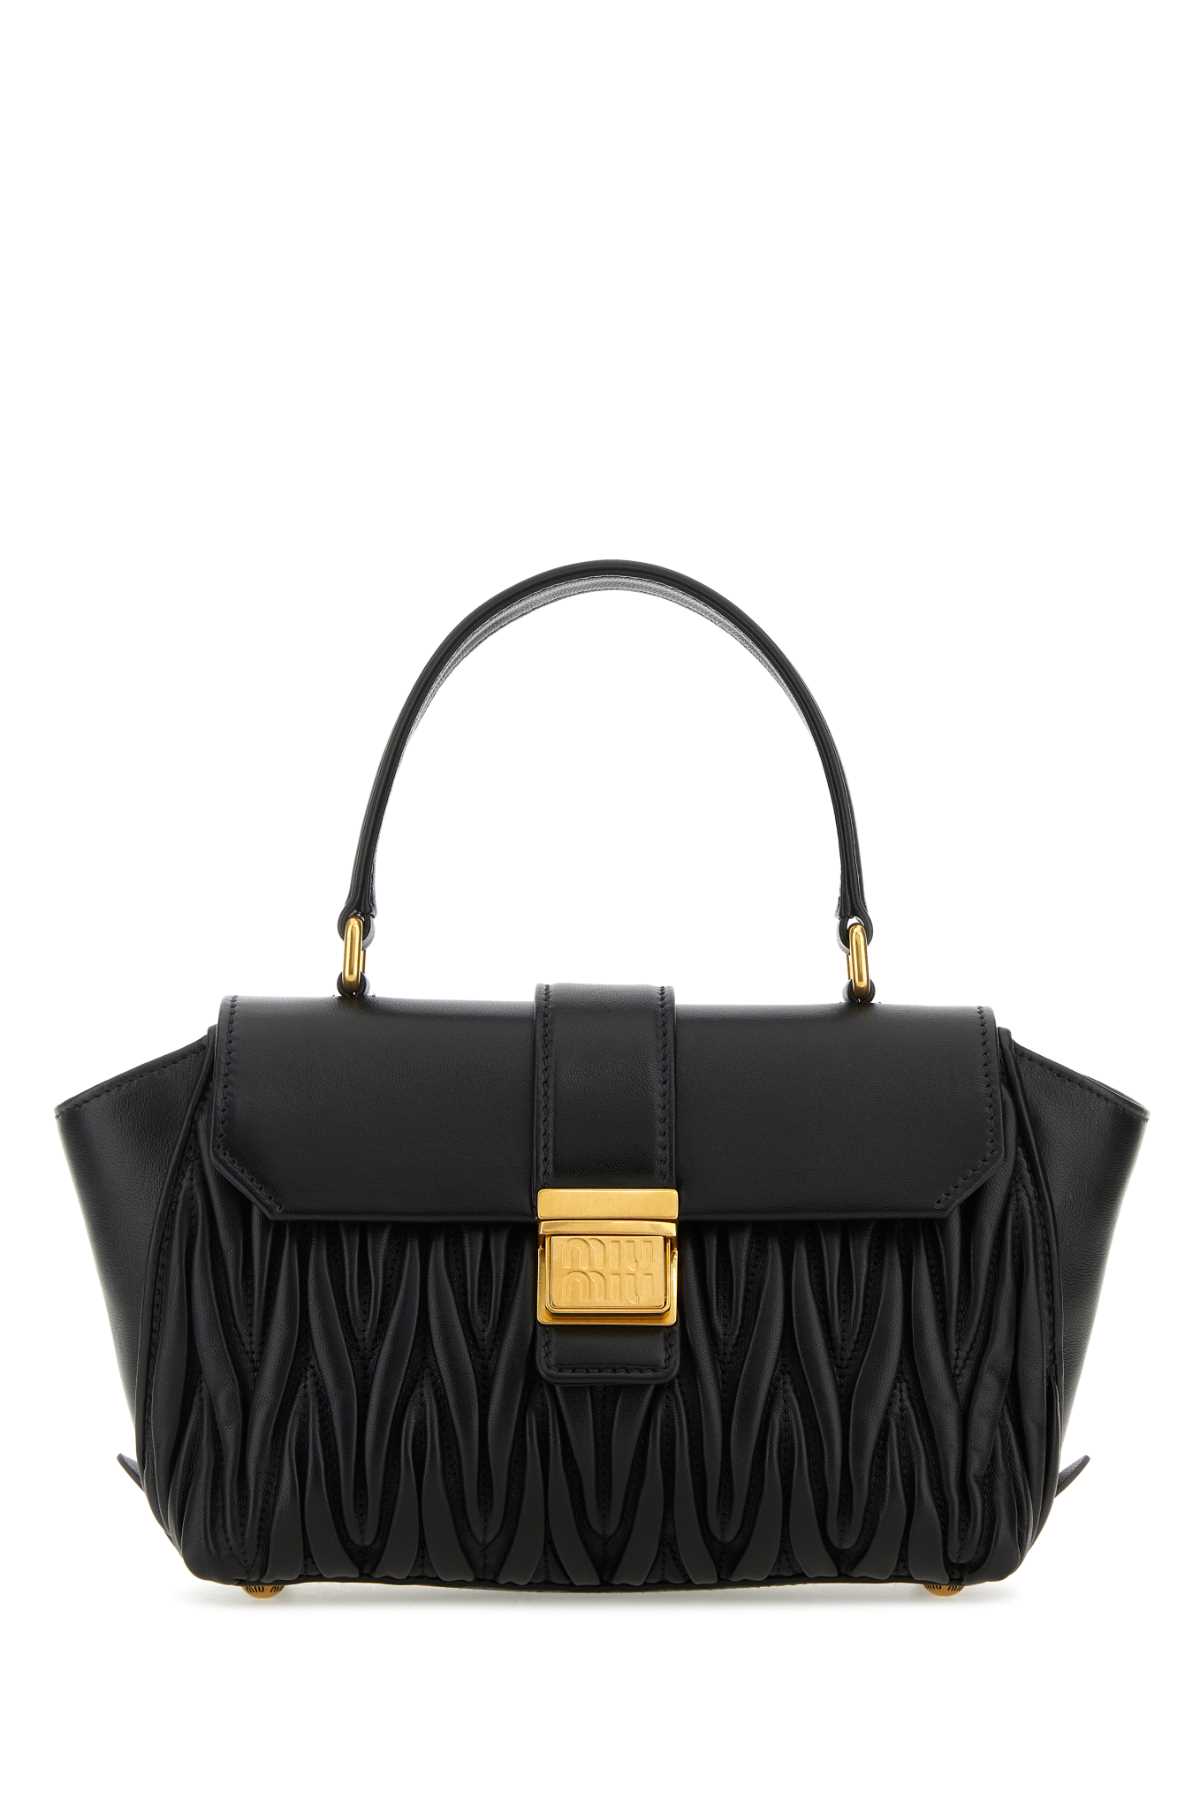 Miu Miu Black Leather Handbag In Nero